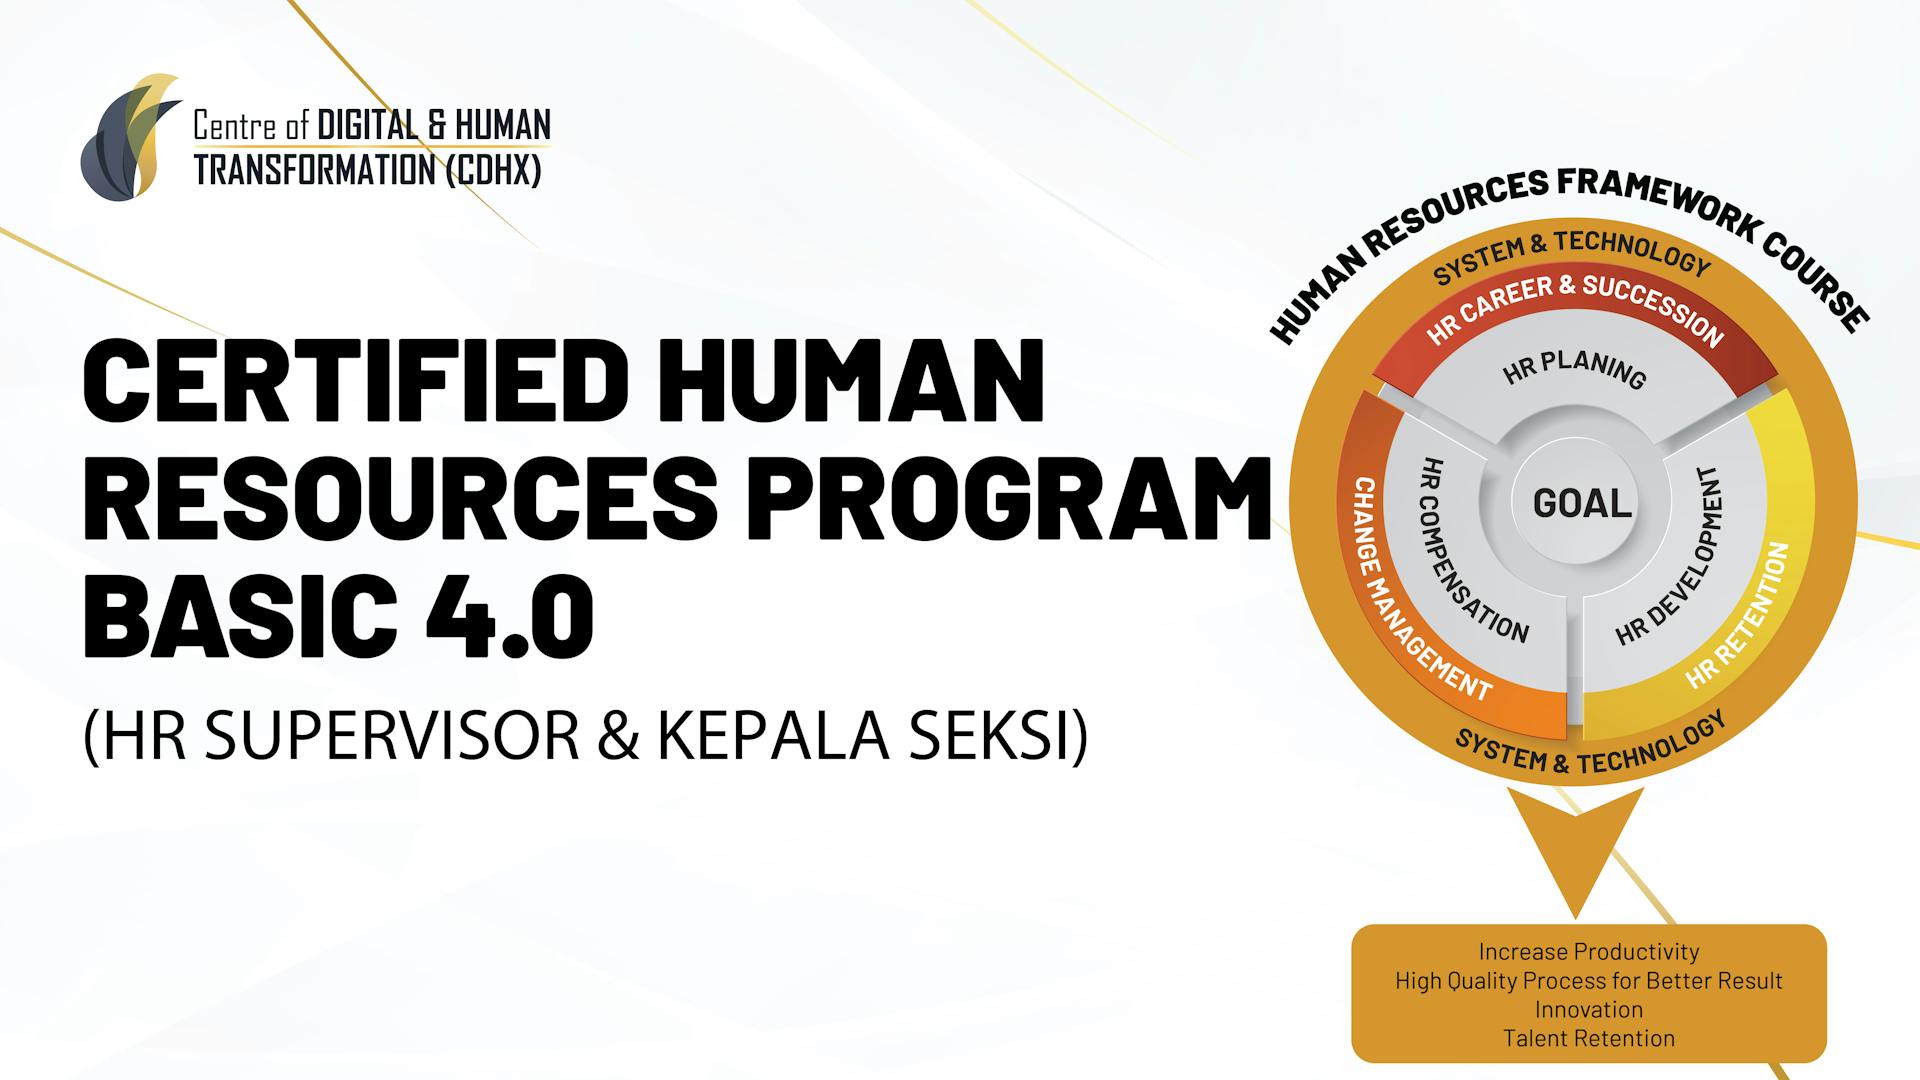 CERTIFIED HUMAN RESOURCES PROGRAM BASIC 4.0 (HR SUPERVISOR & KEPALA SEKSI)-01.jpg